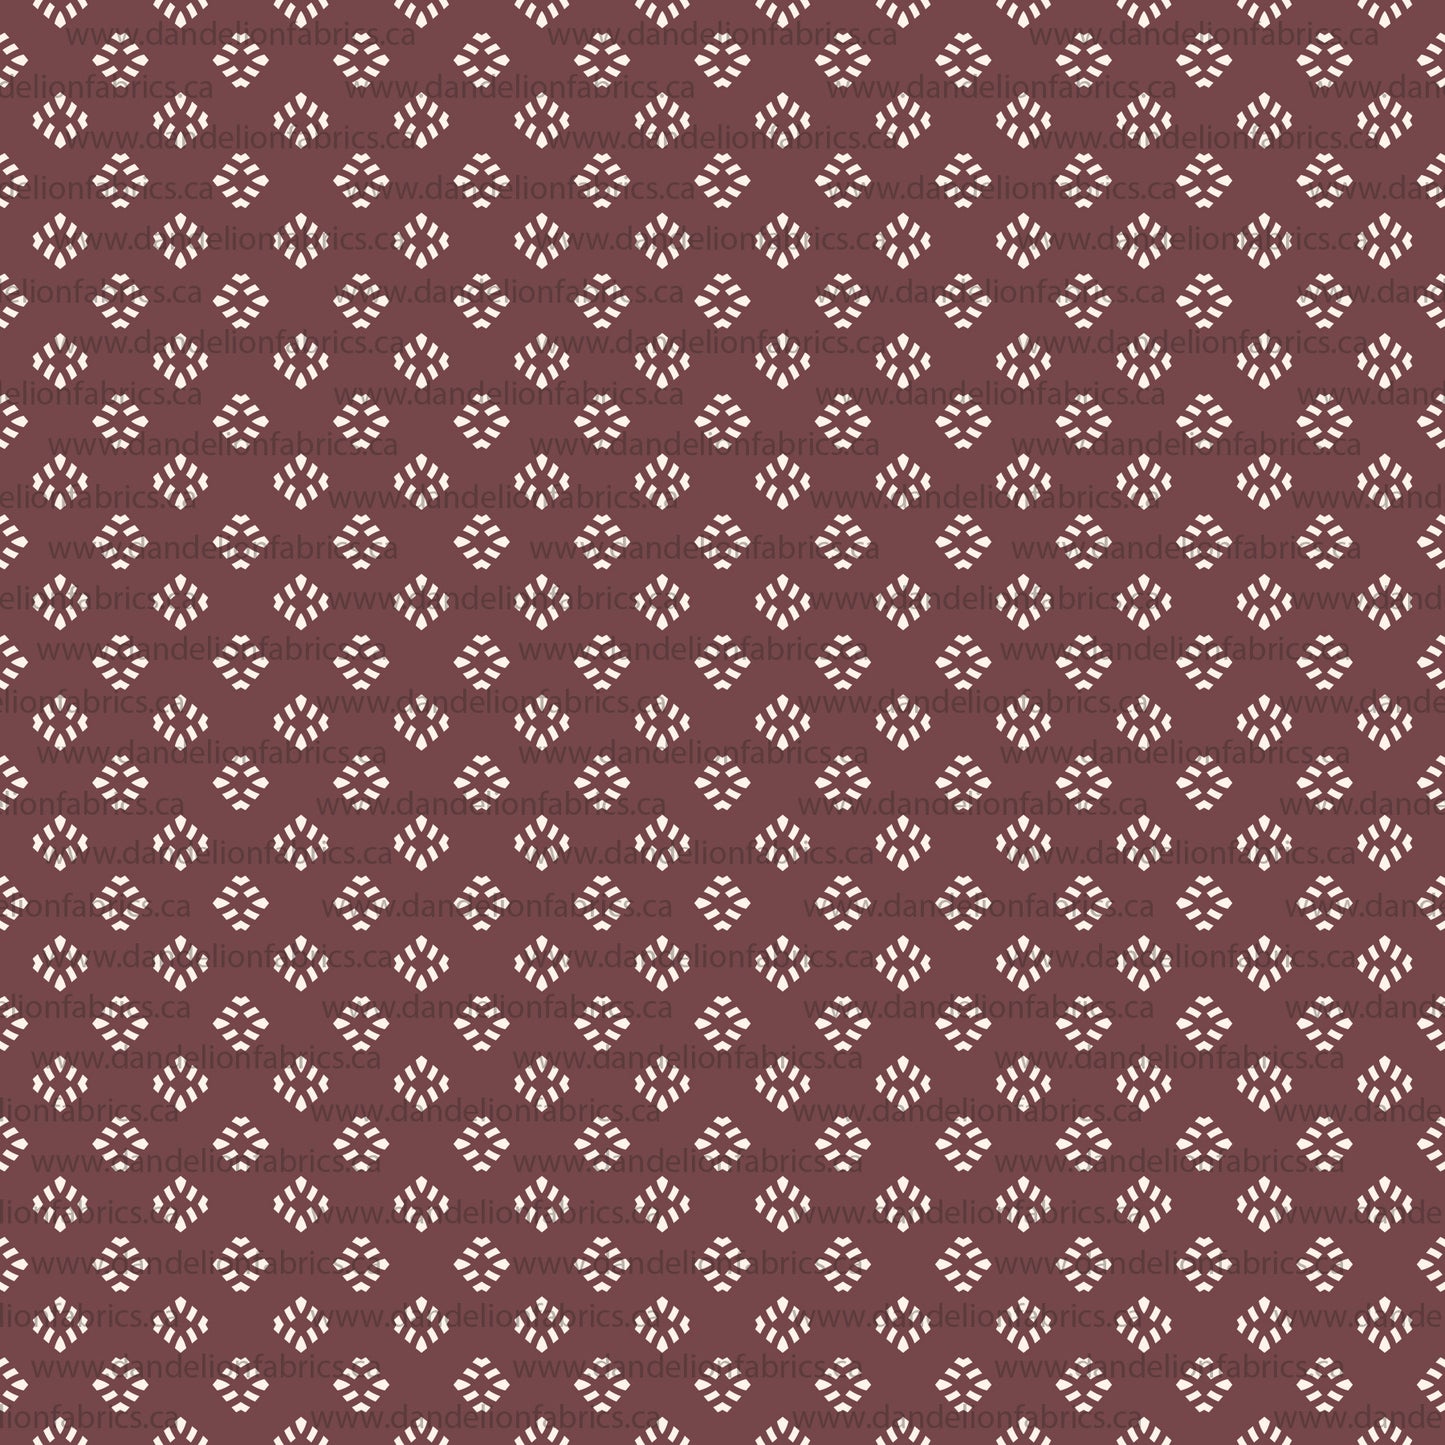 Diamond Print in Burgundy | Brushed Mini Rib Knit Fabric | SOLD BY THE FULL BOLT